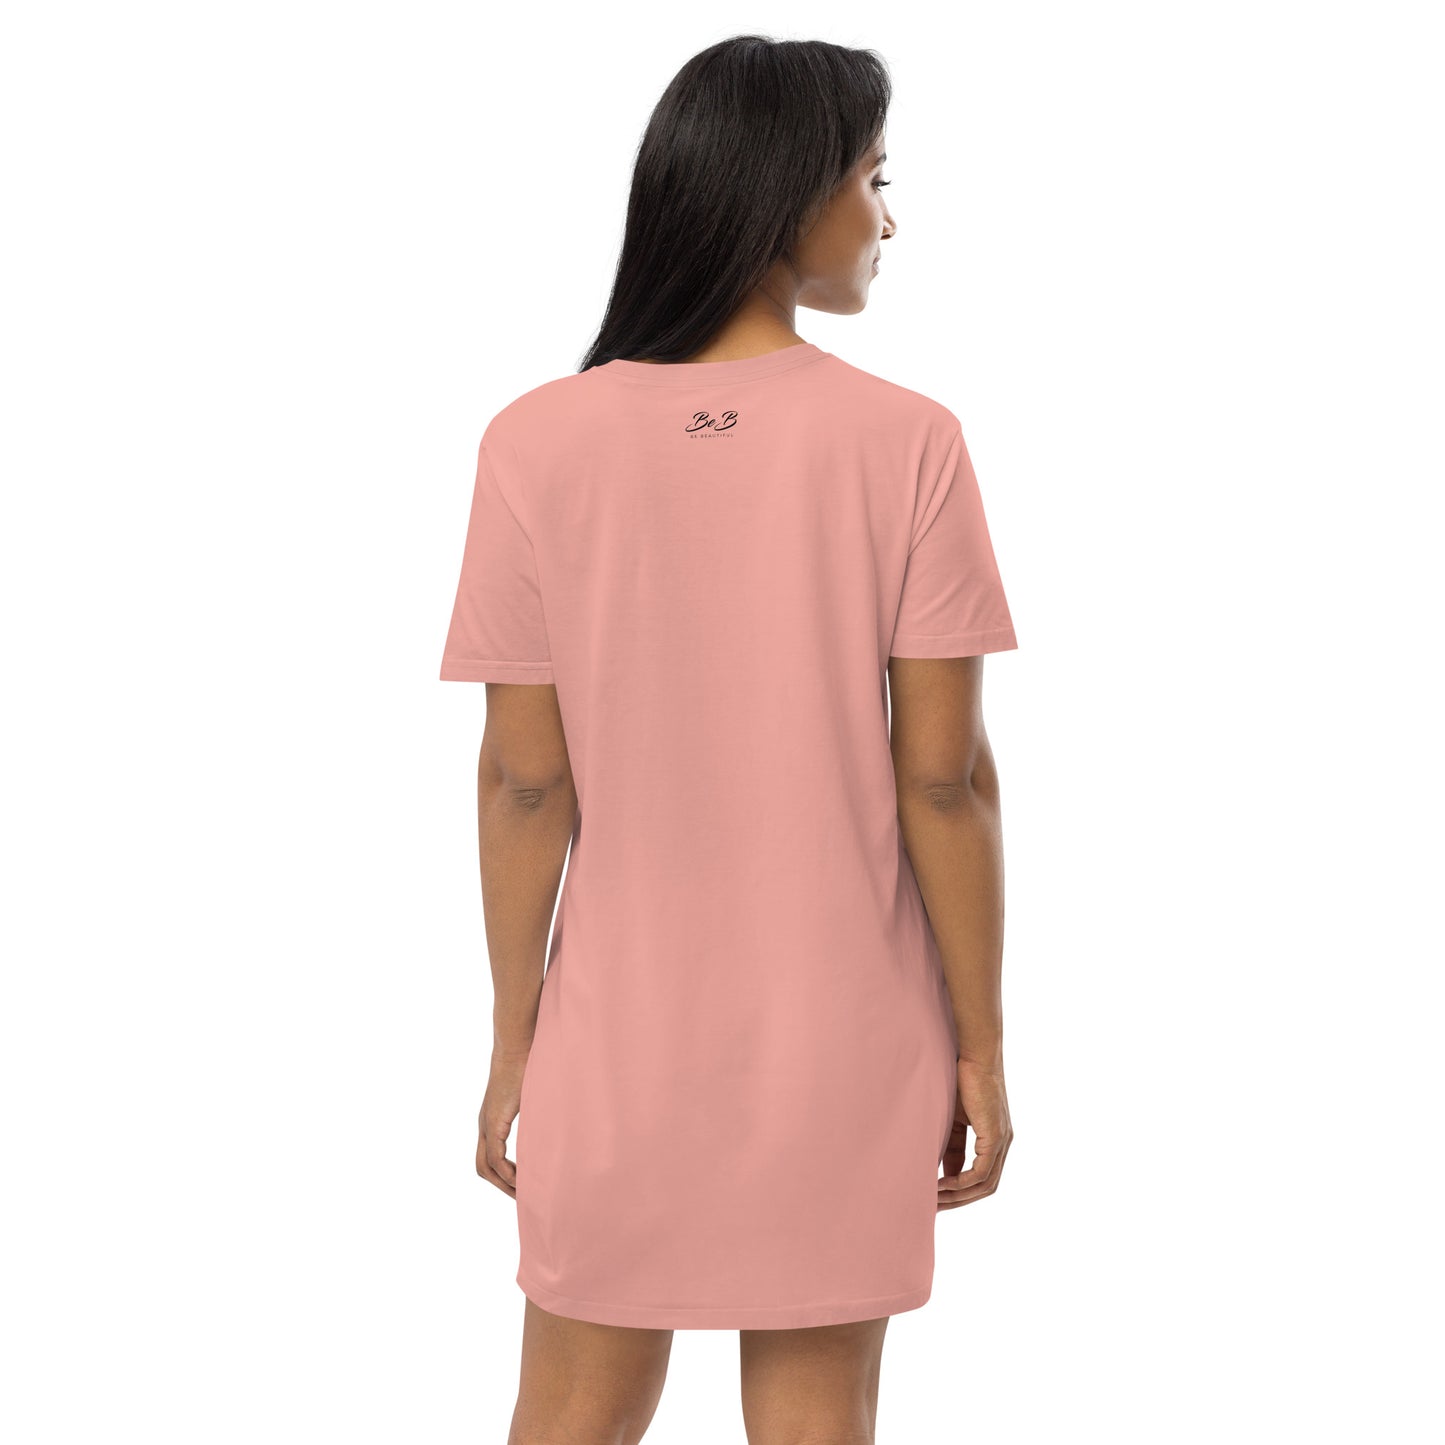 BeB Organic Cotton T-Shirt Dress